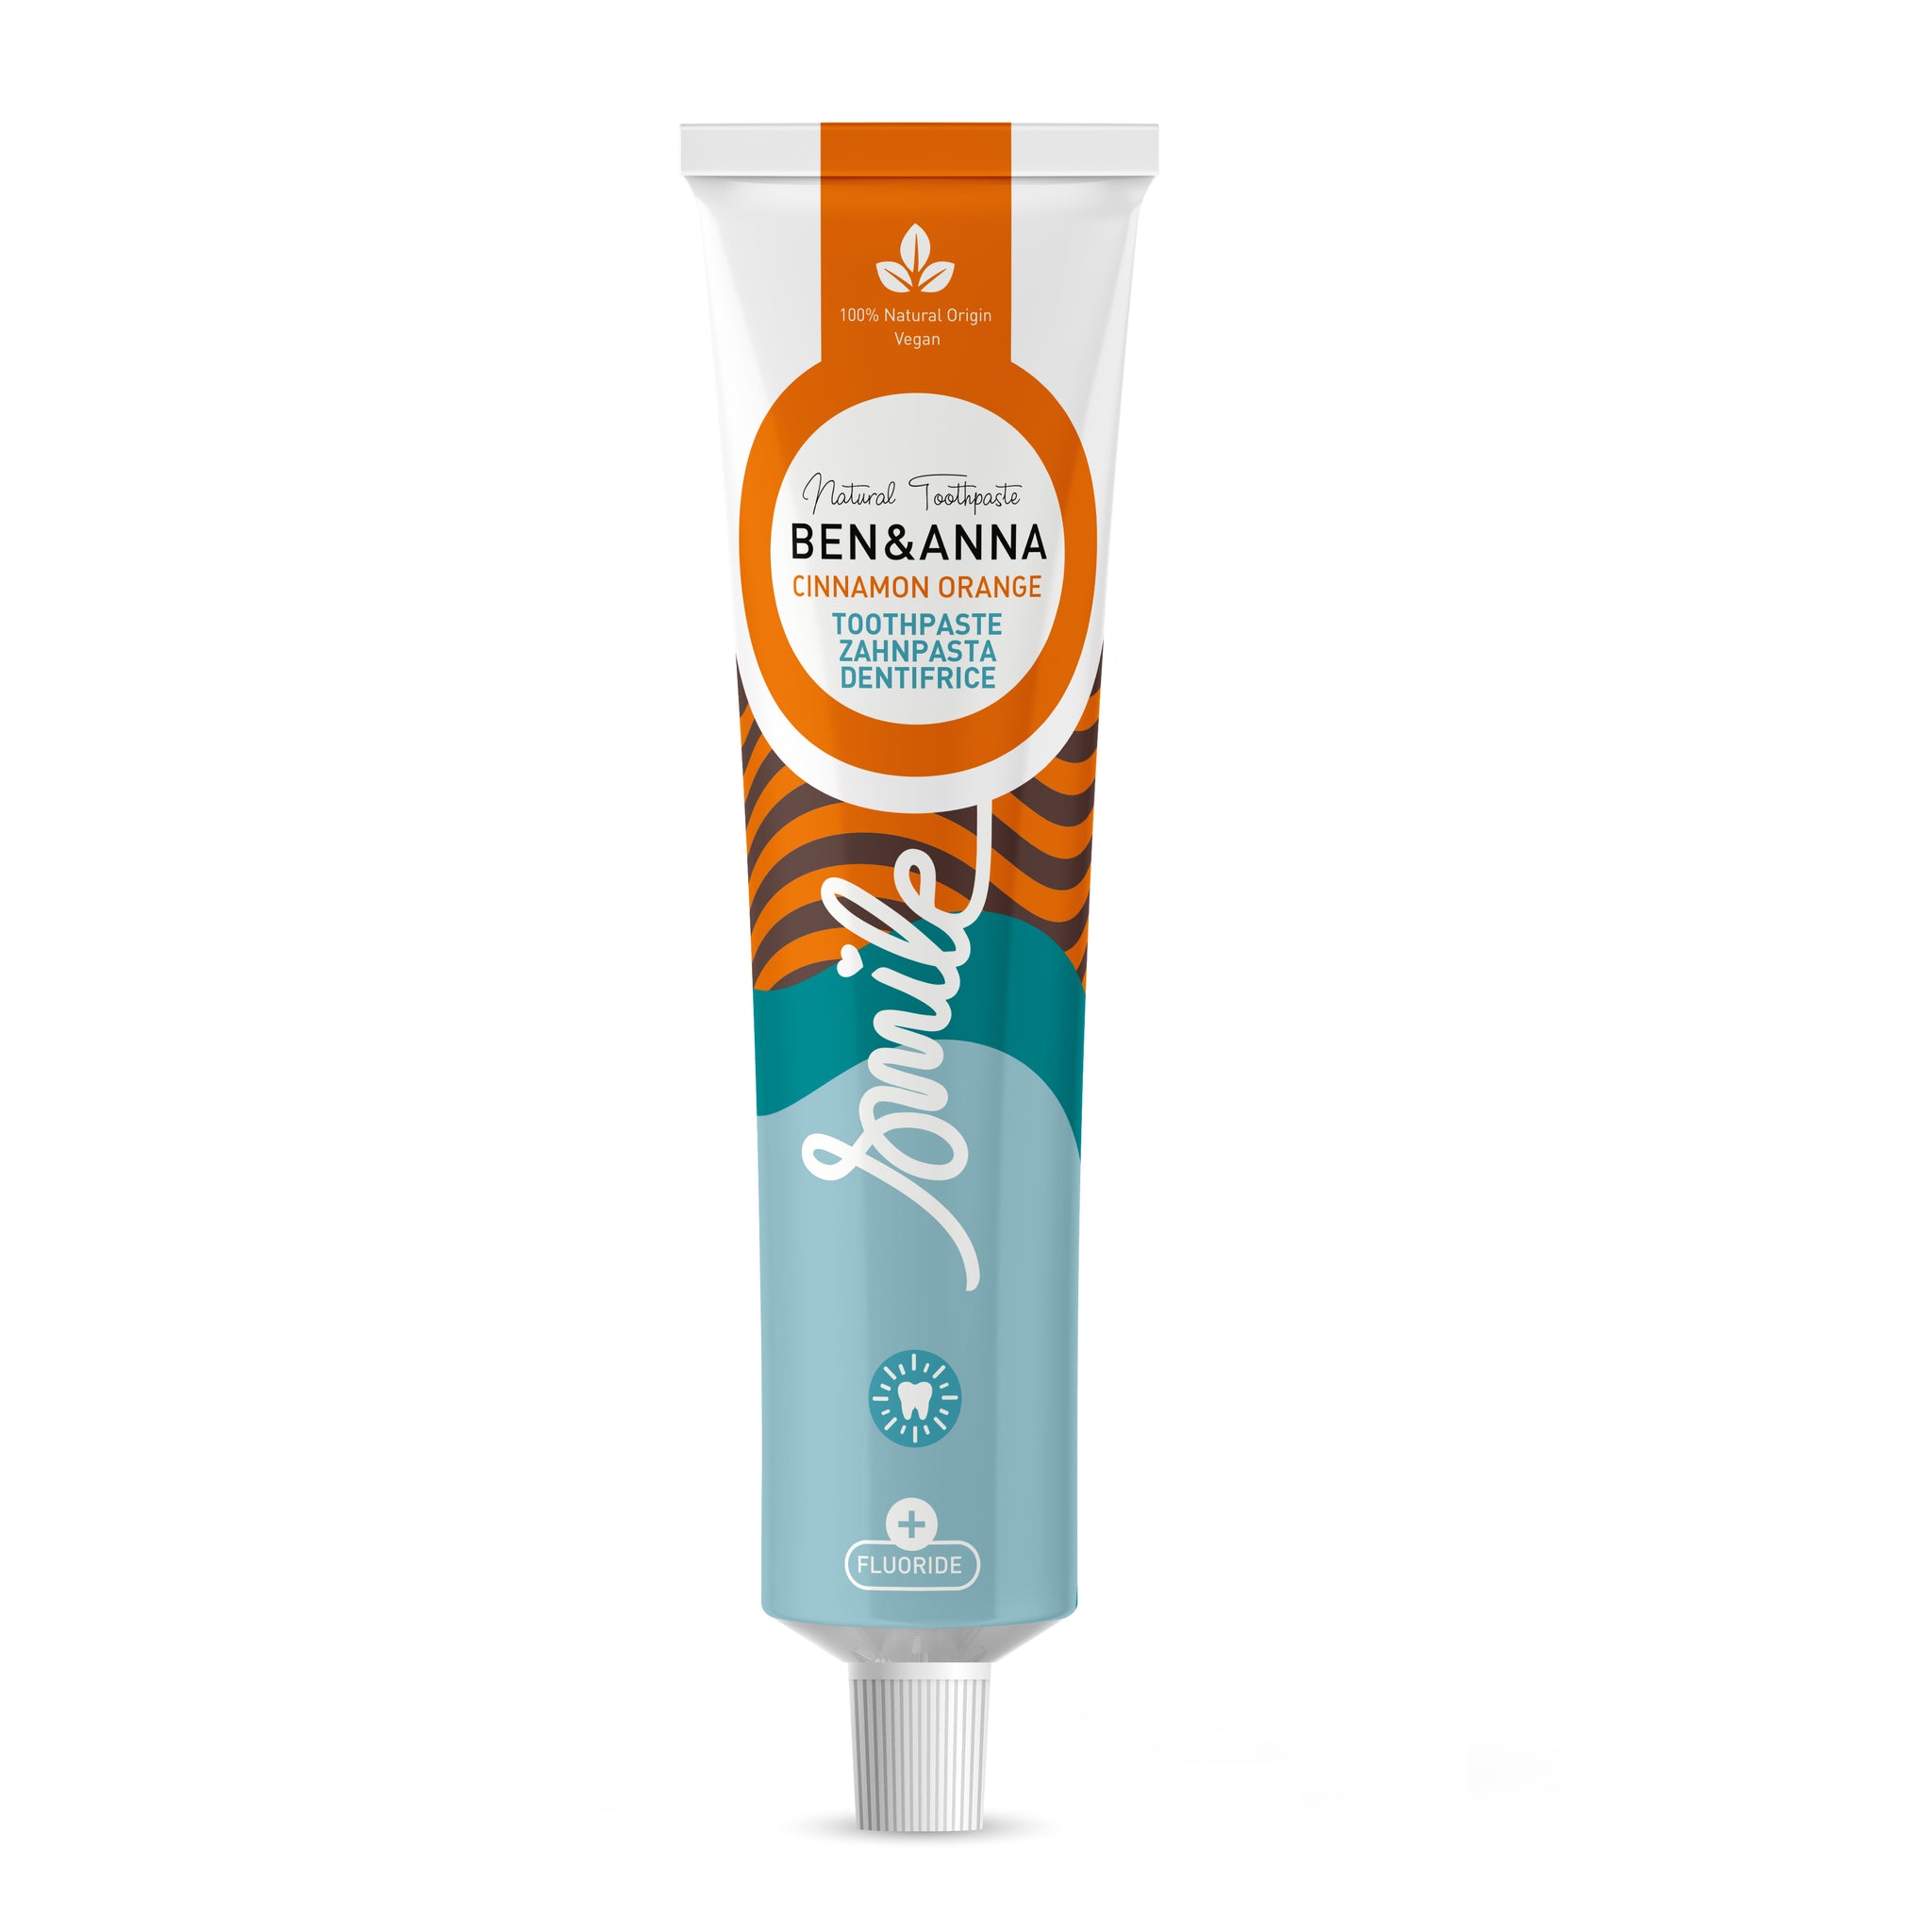 Toothpaste tube - cinnamon orange with fluoride